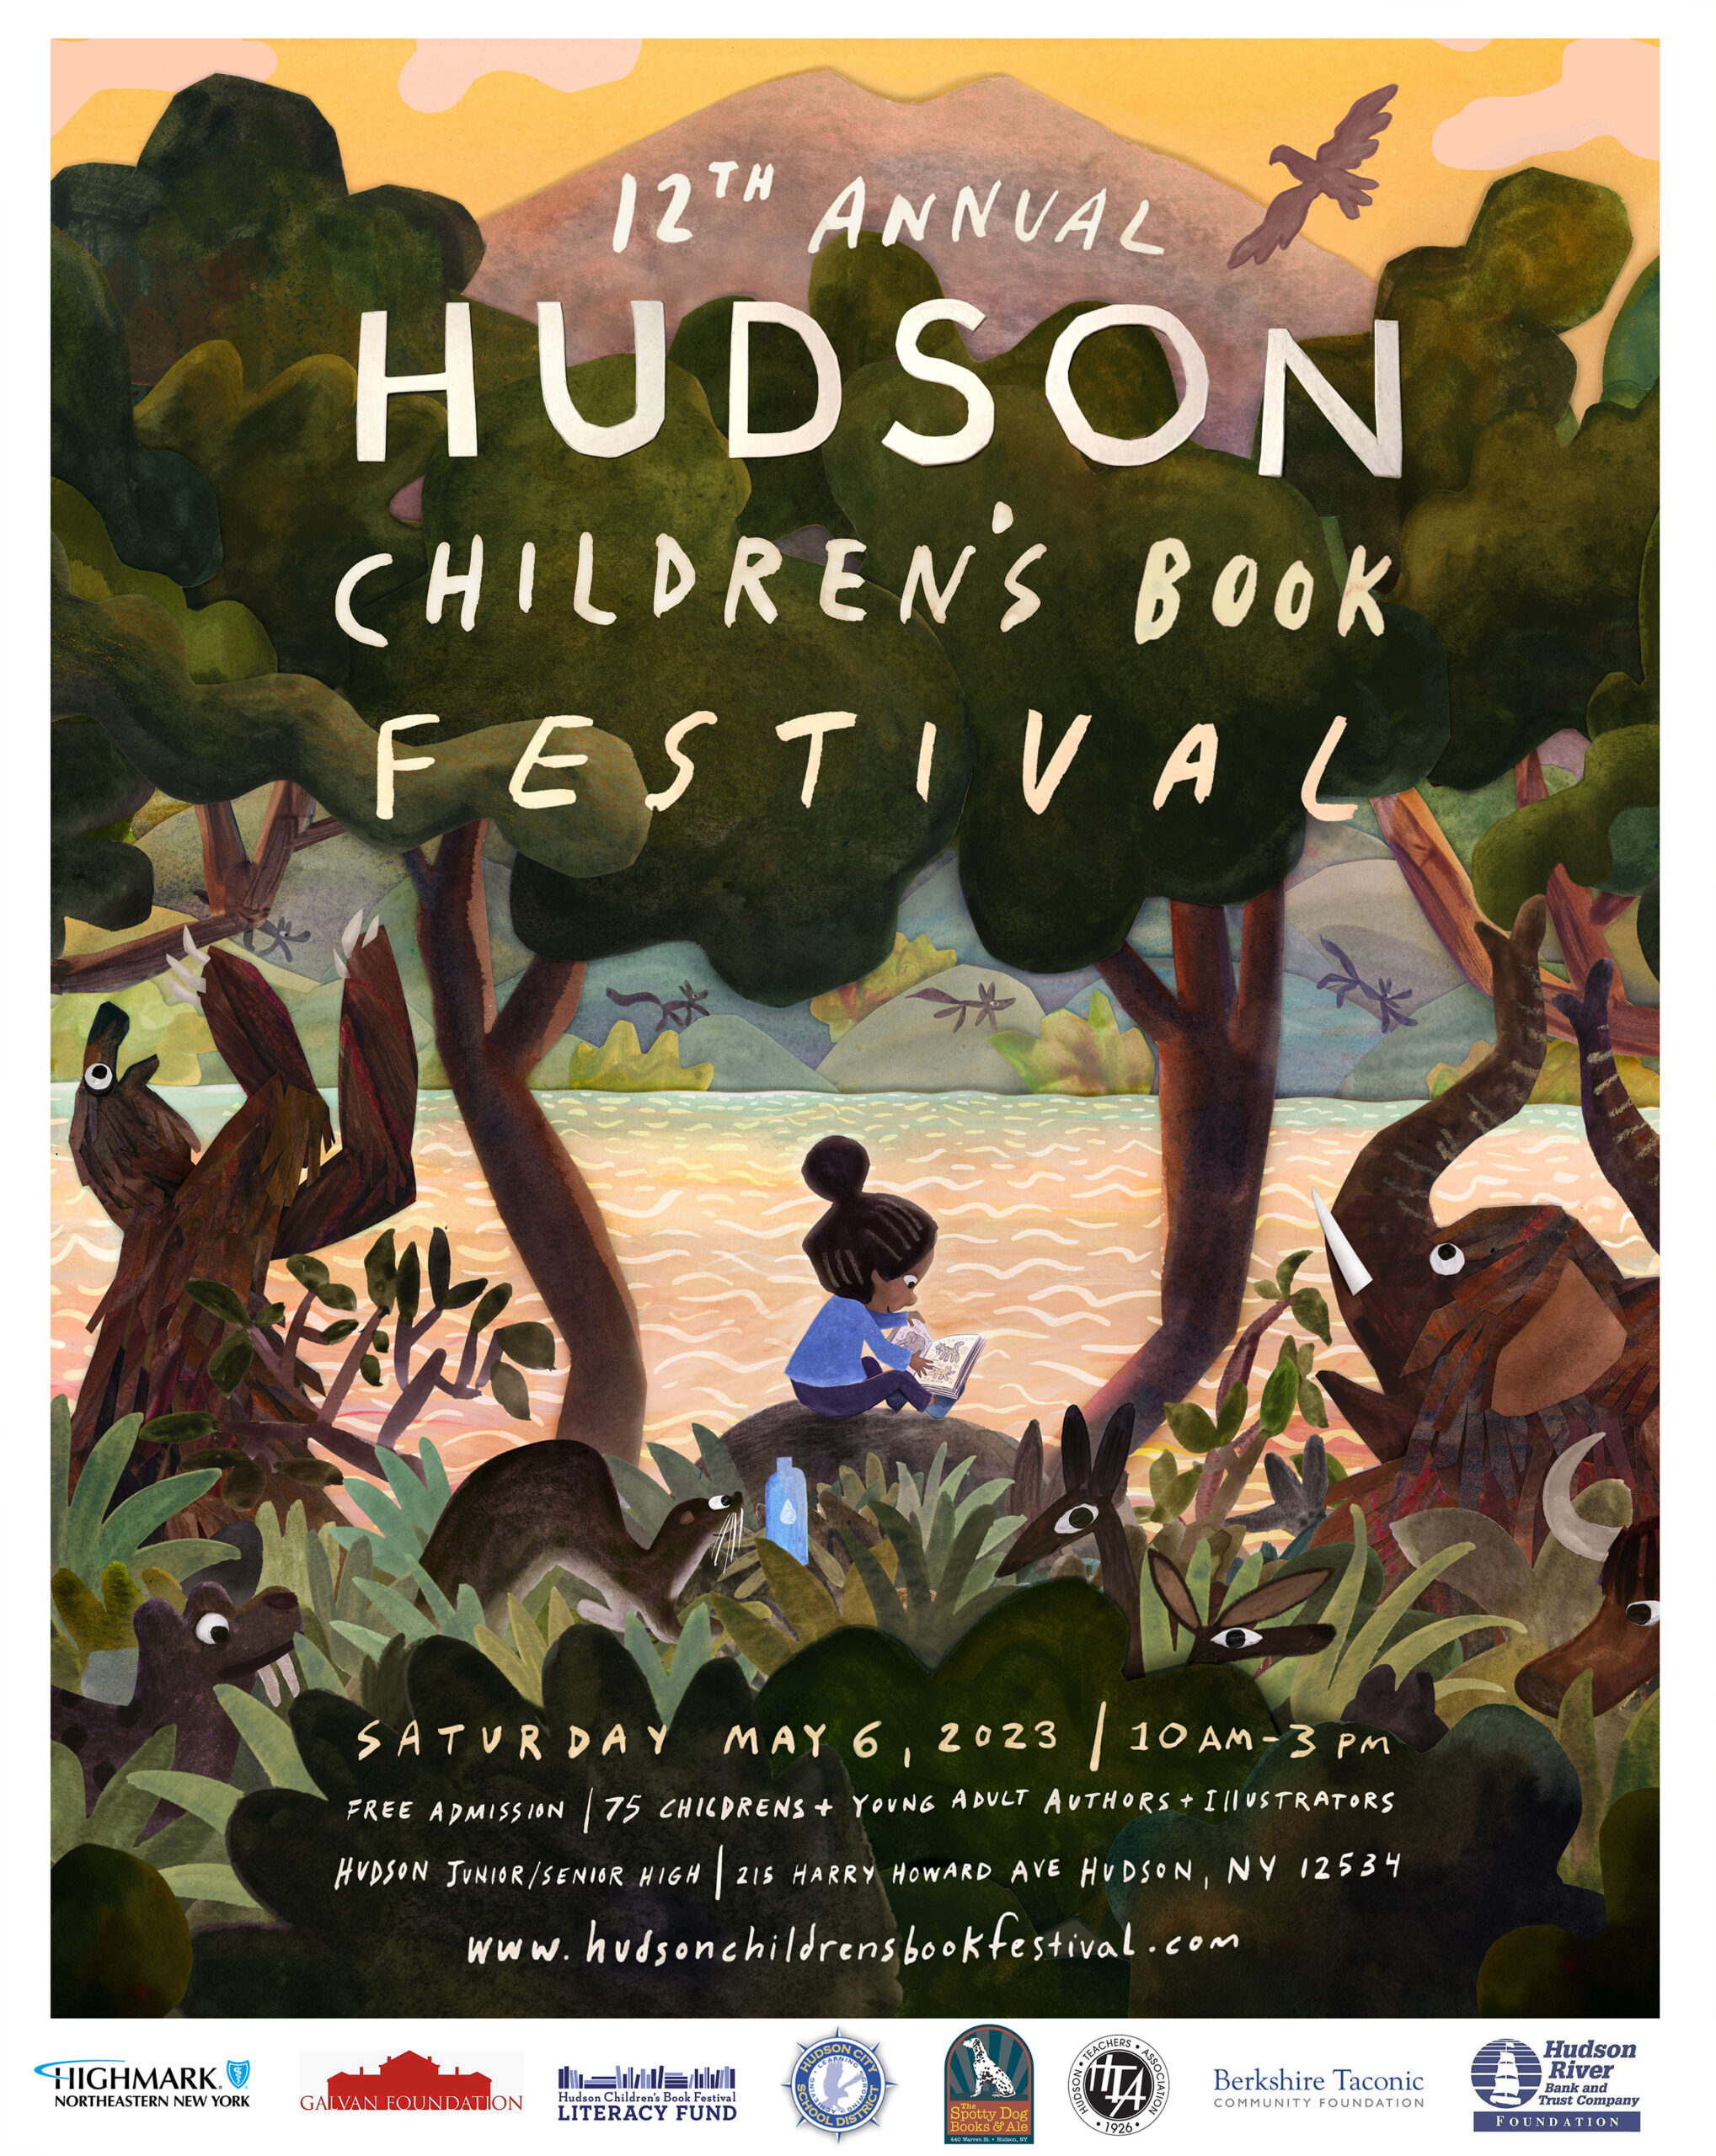 Hudson Children's Book Festival - May 6th, 2023 - Hudson NY